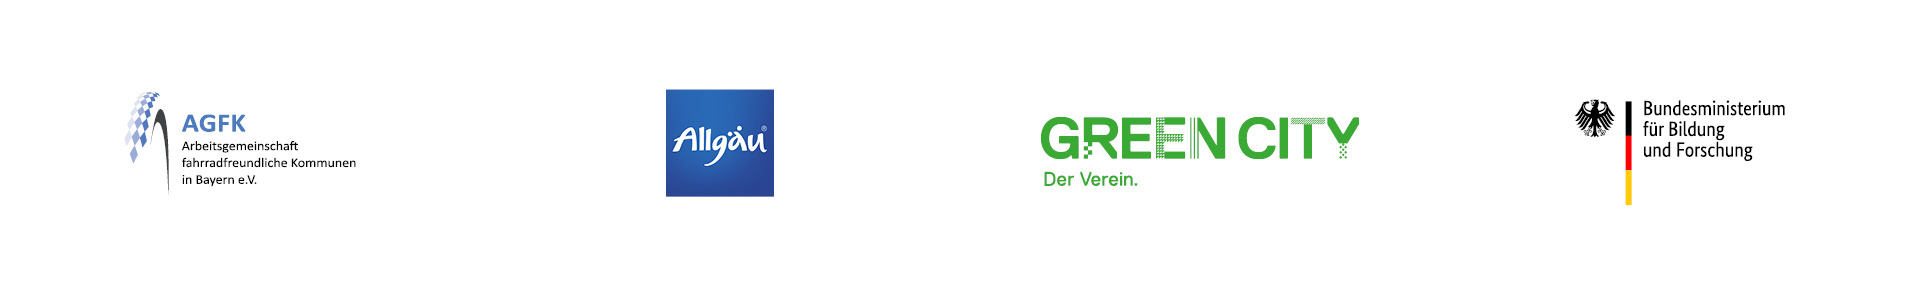 Kunden: Allgäu GmbH, Green City e. V. , Emmy Sharing